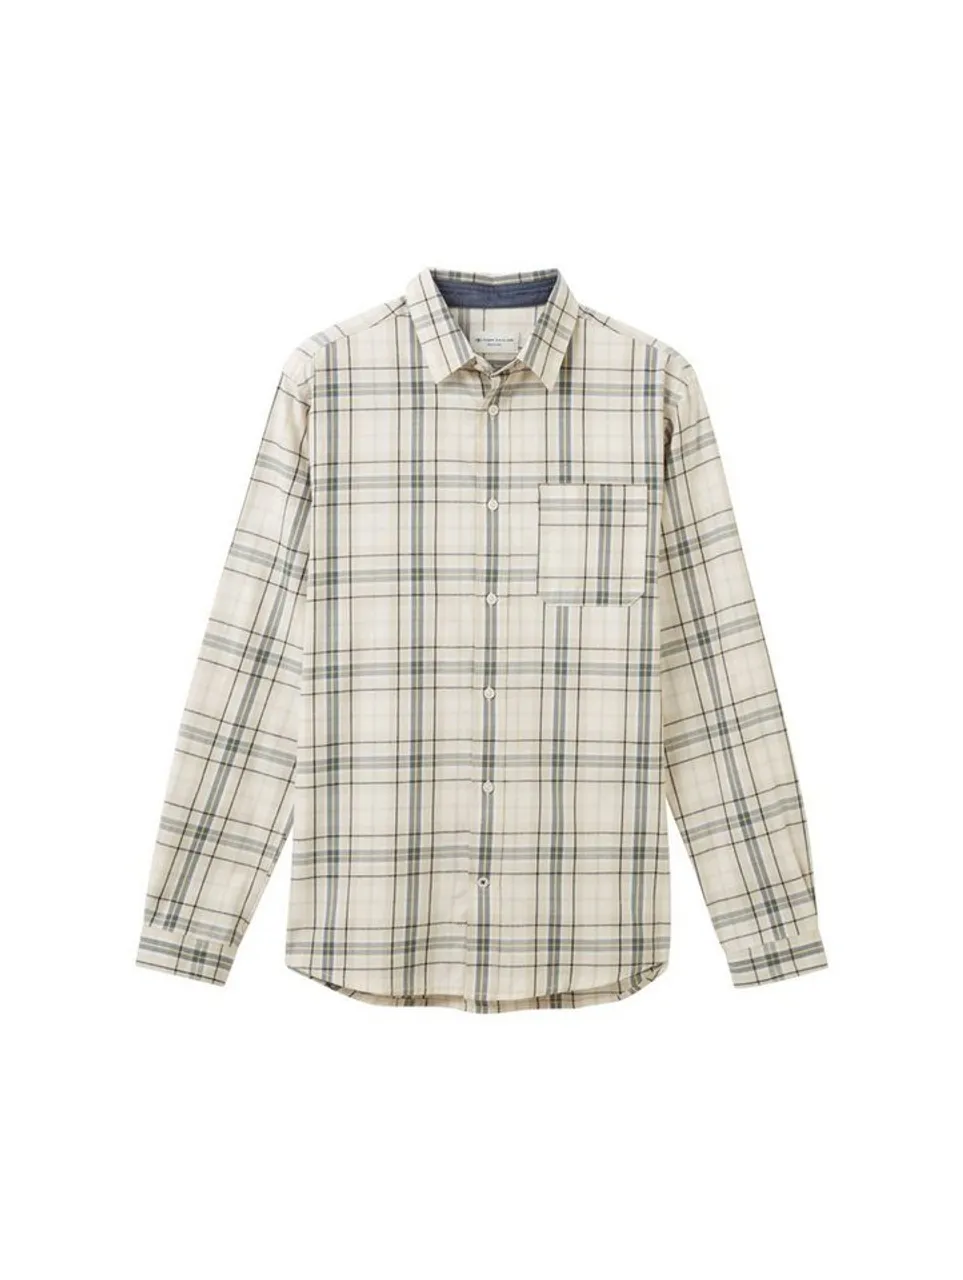 TOM TAILOR Kurzarmshirt checked flannel shirt